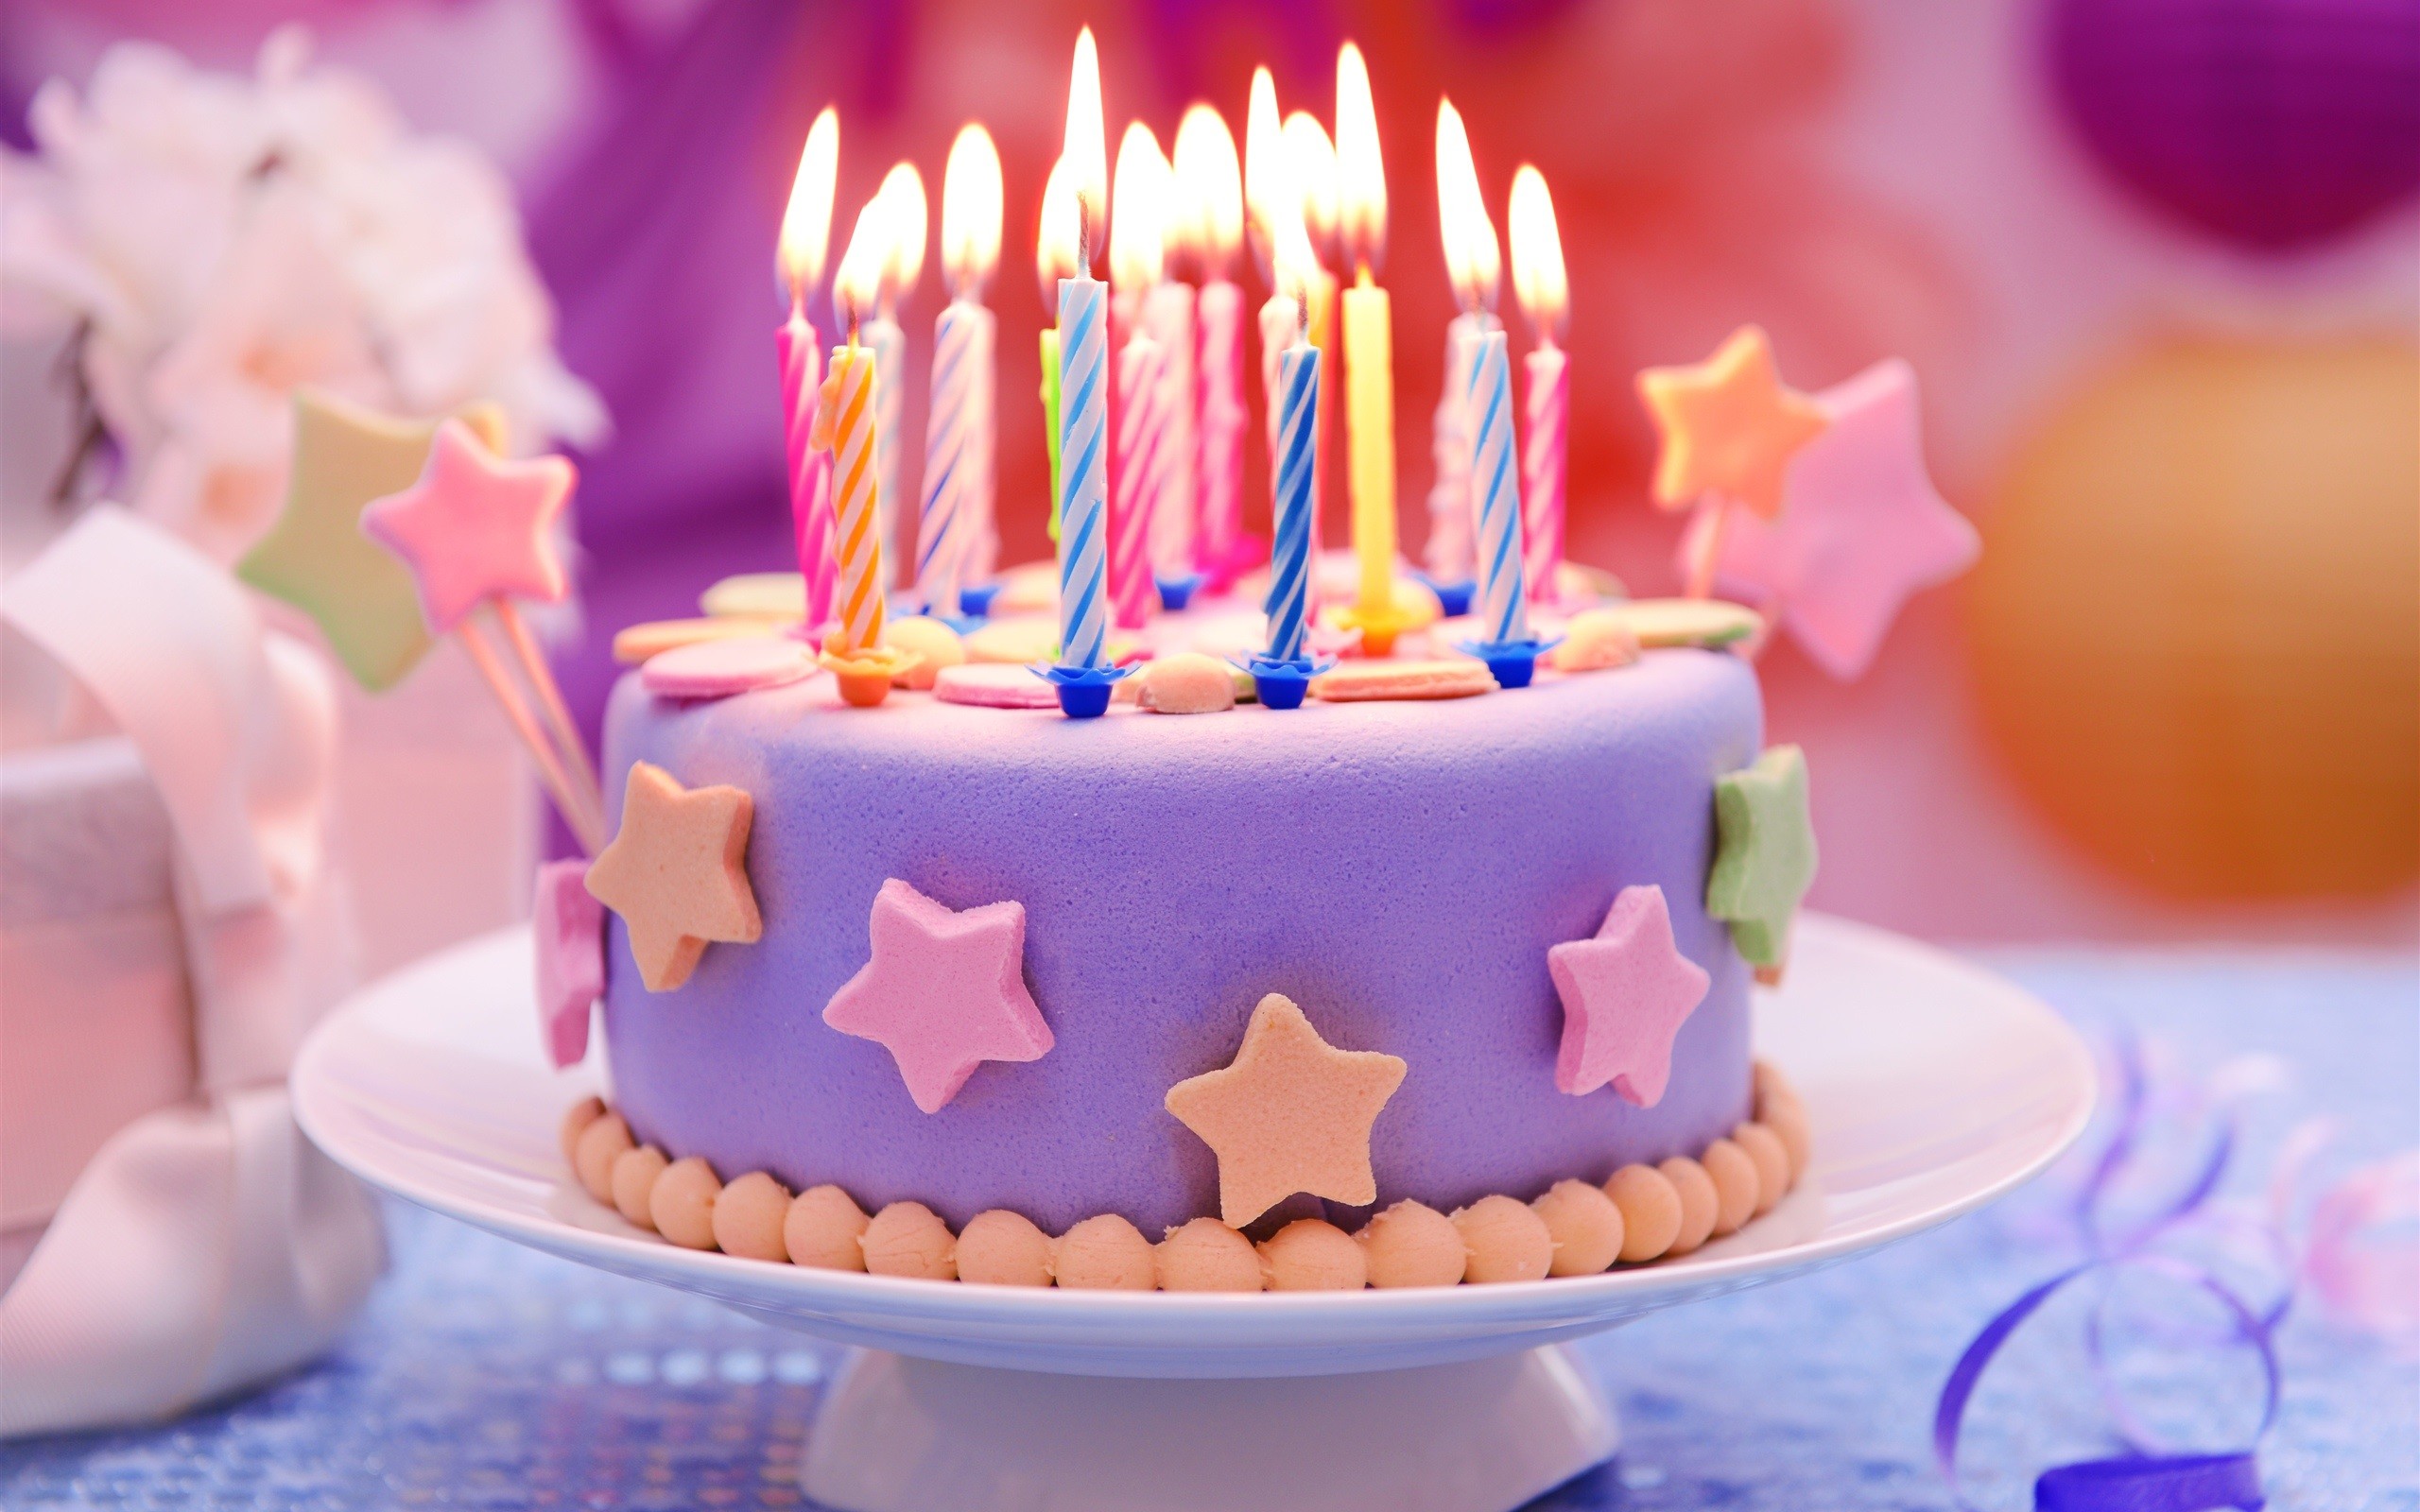 happy birthday wallpaper,cake,cake decorating,sugar paste,birthday cake,food